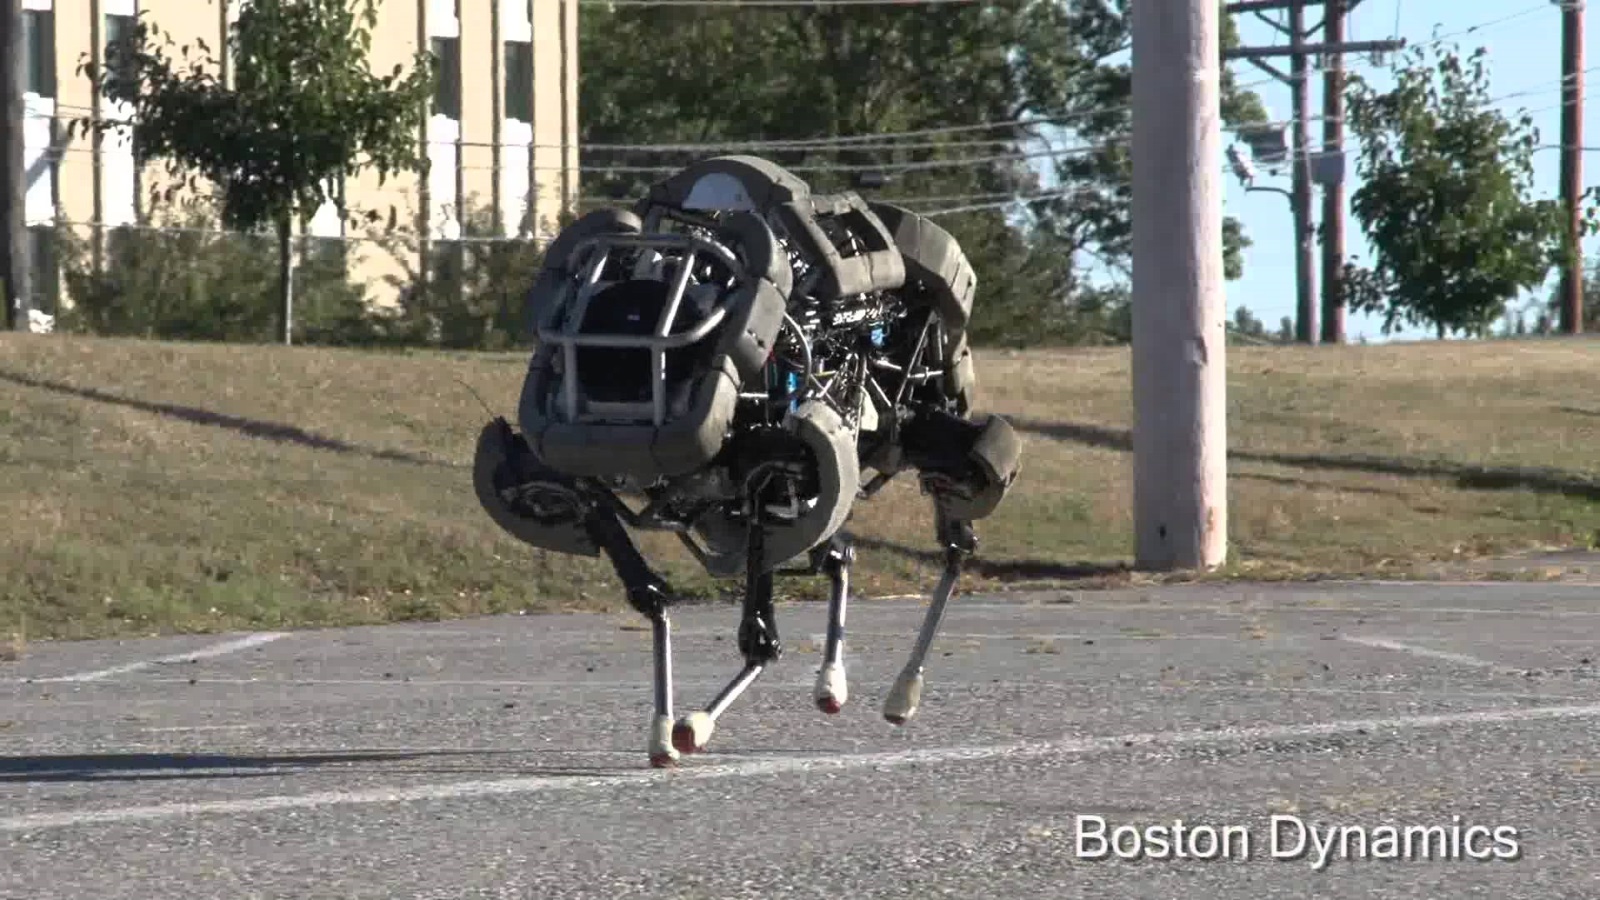 Savvy prototype madras Meet Spot: Boston Dynamics's kickable robot dog - SiliconANGLE